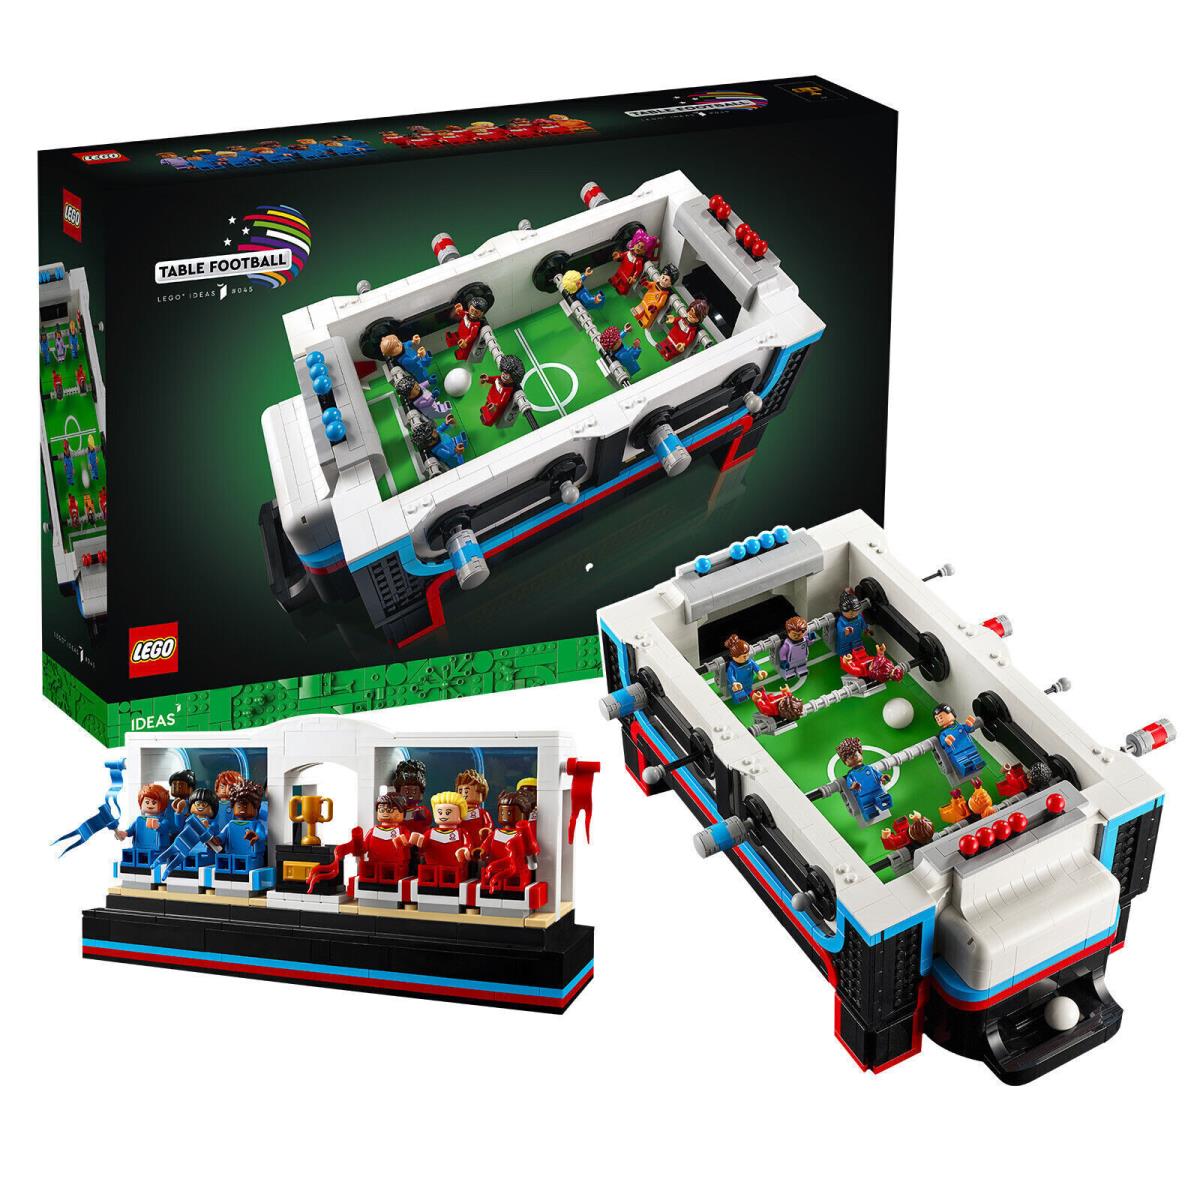 Lego Ideas: Table Football 21337 - New/sealed Box